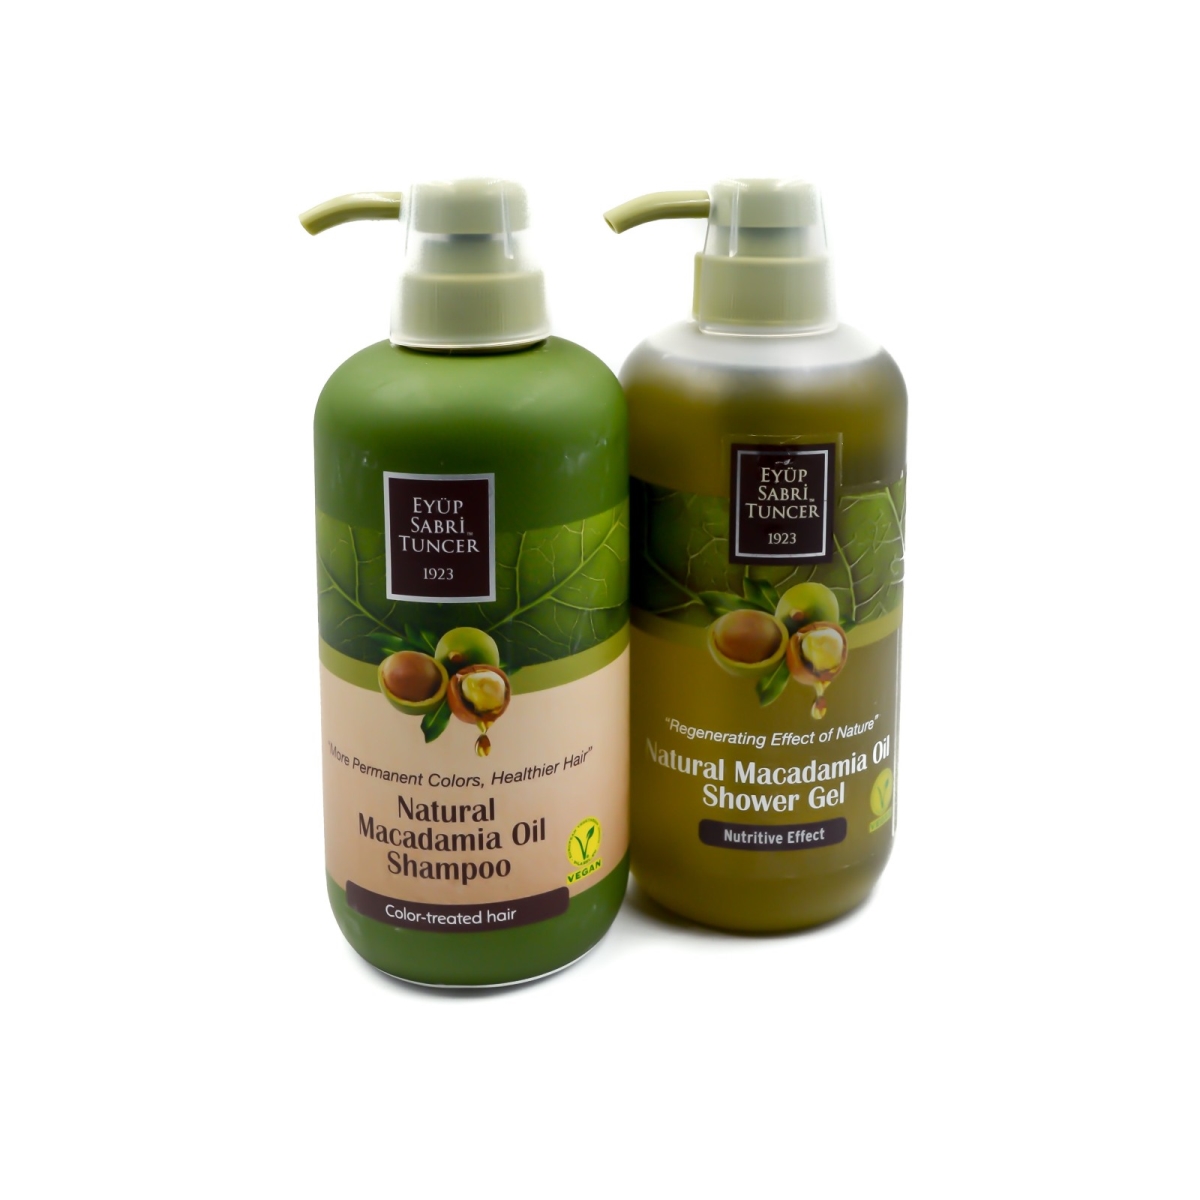 Picture of Eyup Sabri Tuncer EST-COMBO-SHAMPOONSHWGEL-MACA-600 Eyup Sabri Tuncer Natural Macadamia Oil Hair Care Basics Set - Shampoo & Shower Gel